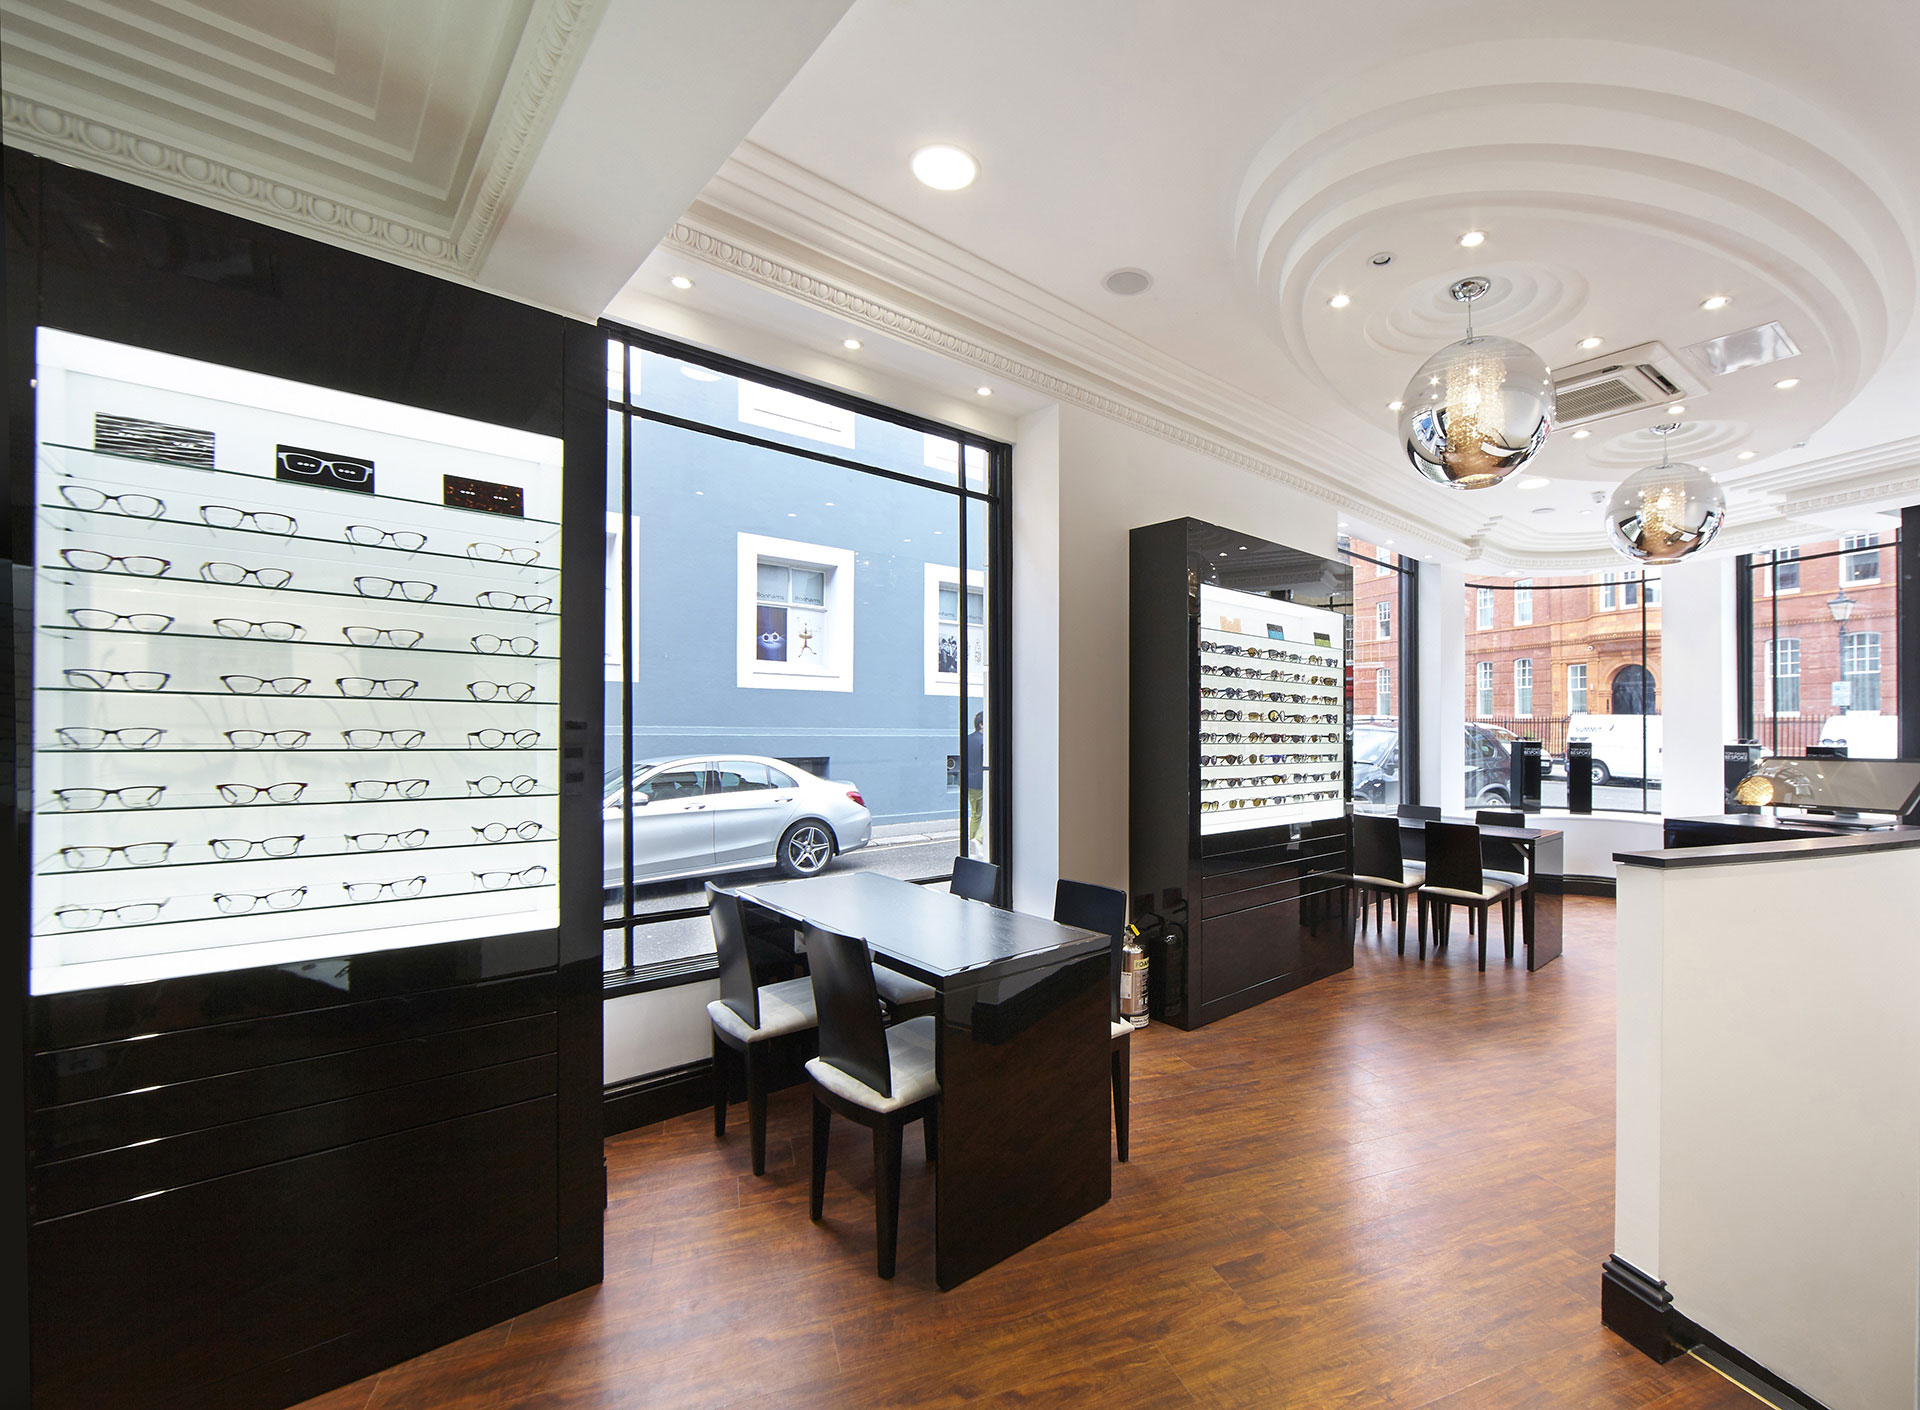 Shop floor of Tom Davies Bespoke Opticians in Knightsbridge